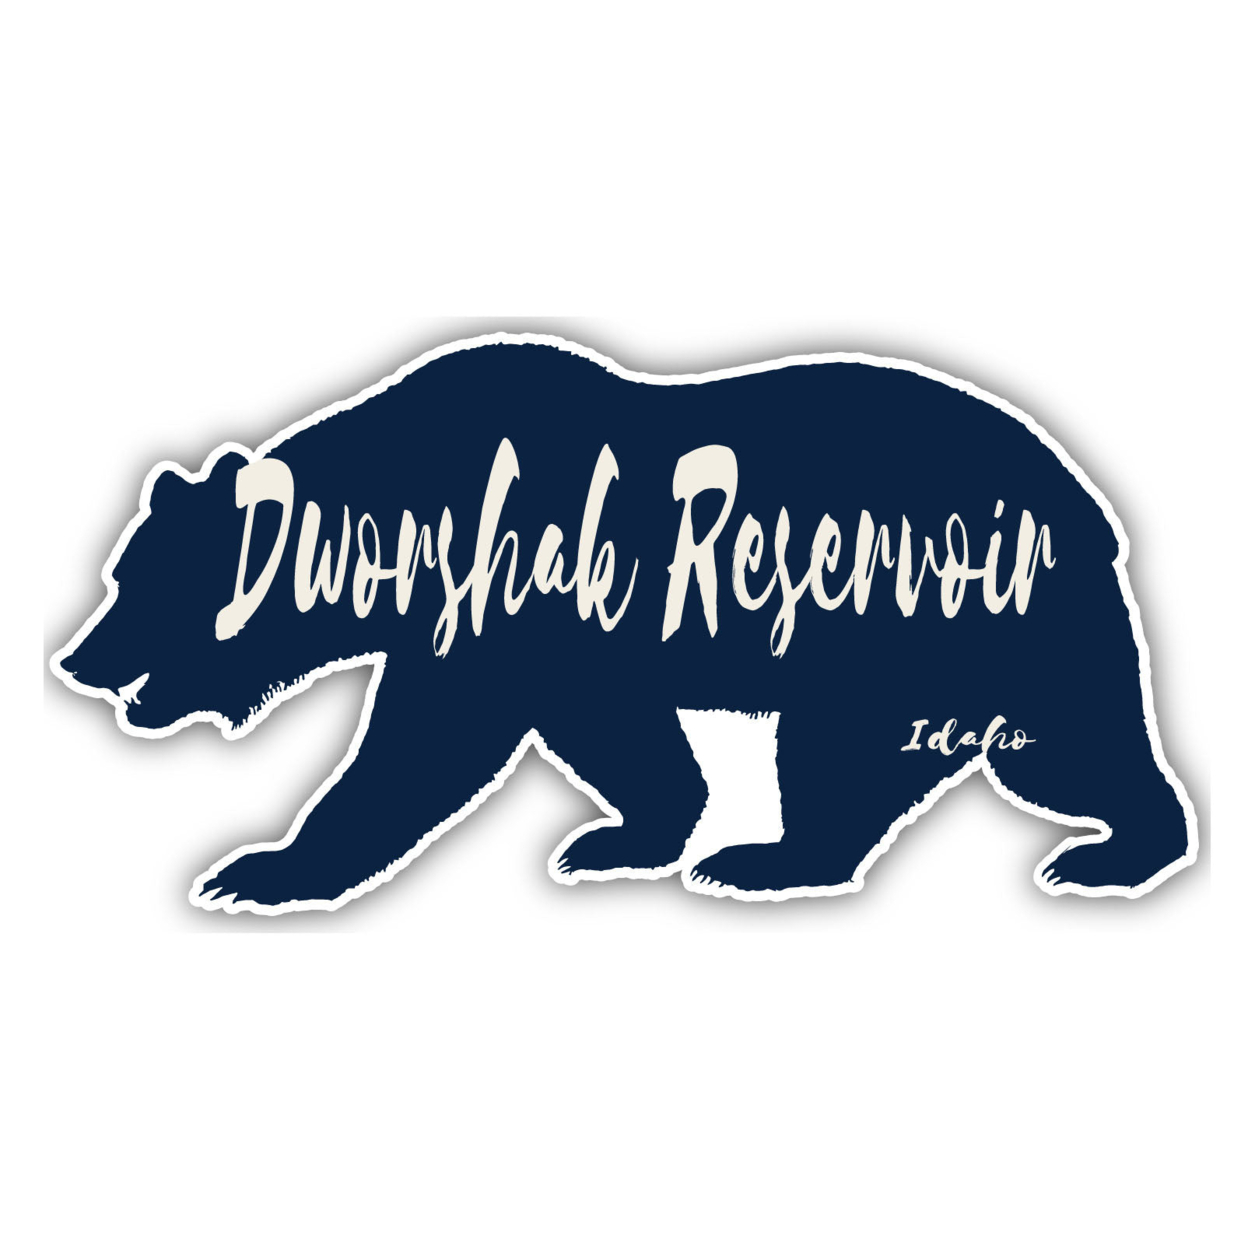 Dworshak Reservoir Idaho Souvenir Decorative Stickers (Choose Theme And Size) - 4-Pack, 10-Inch, Bear